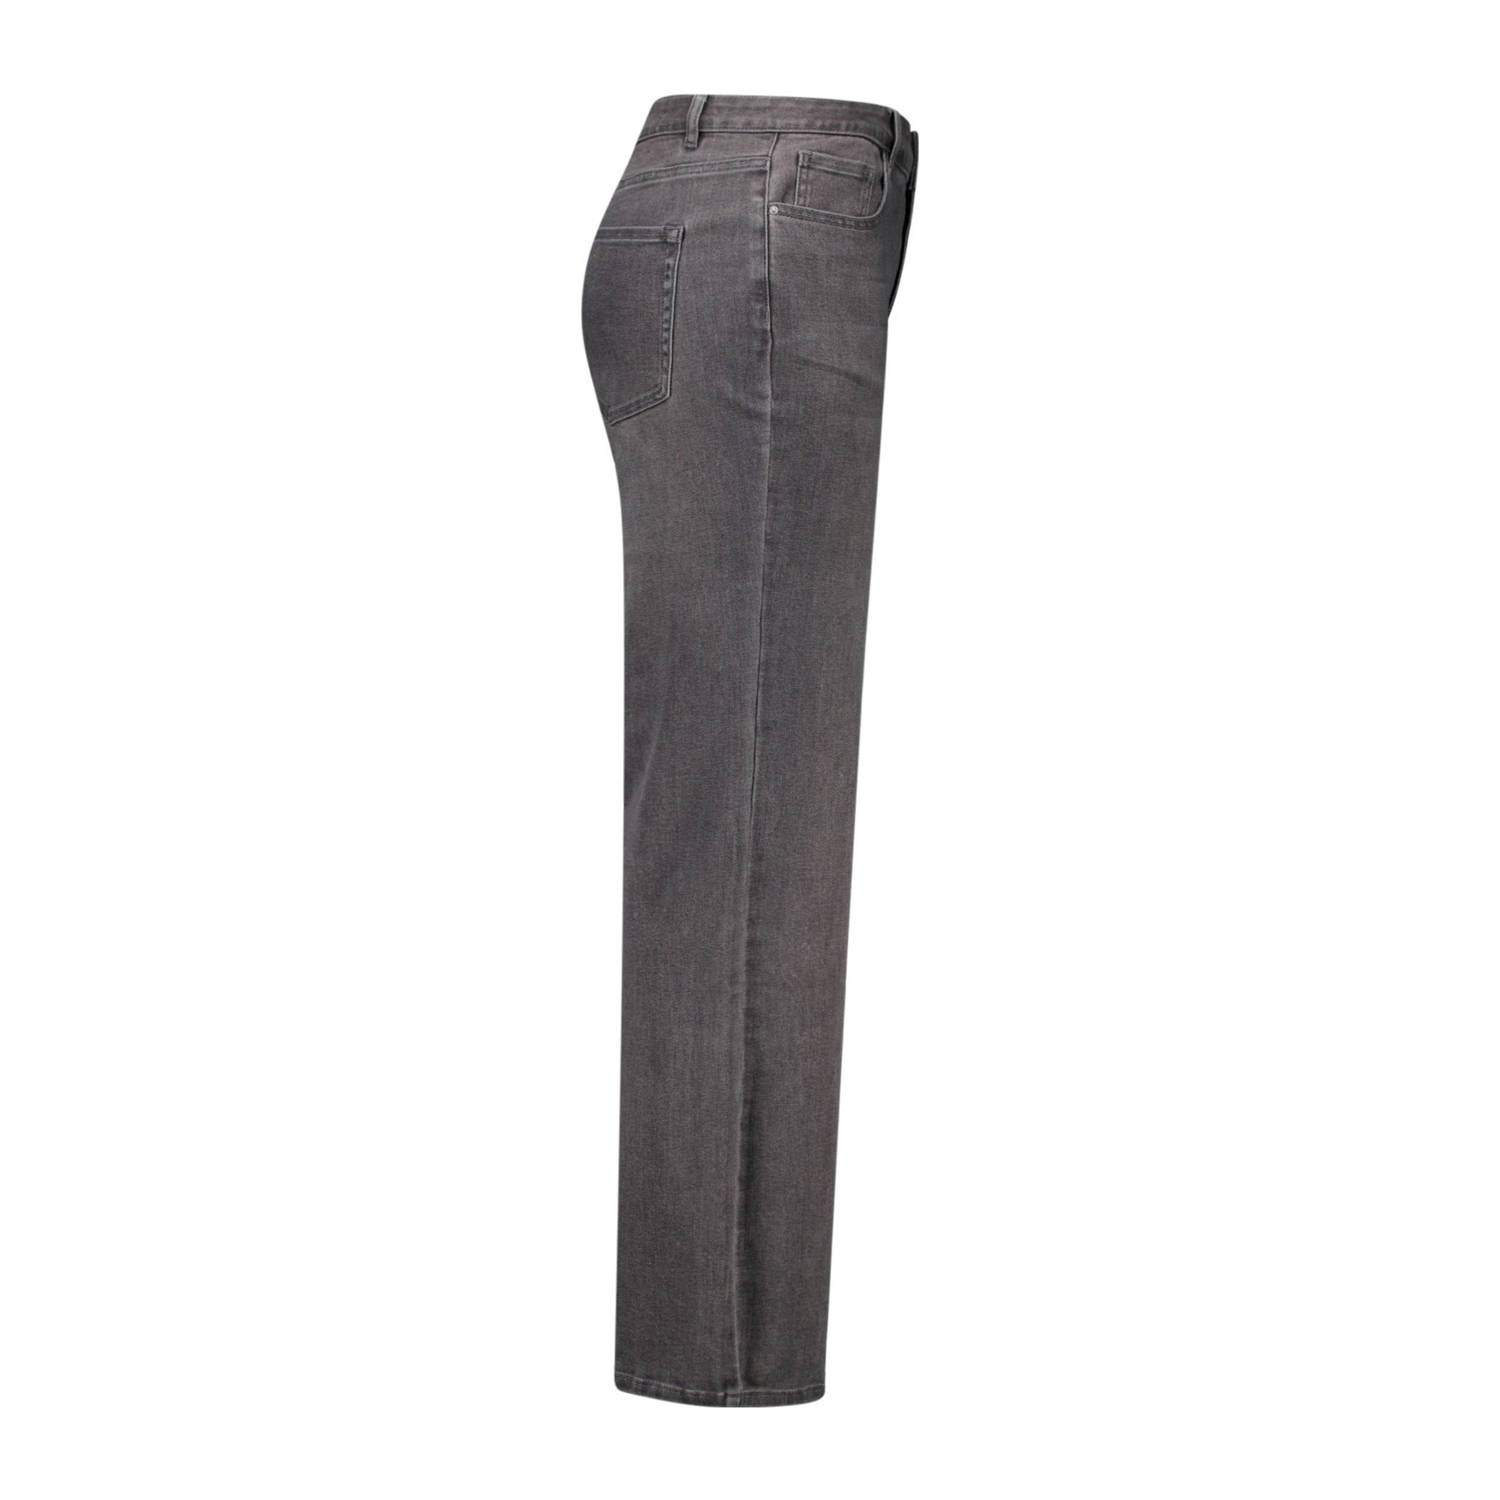 MS Mode wide leg jeans grijs